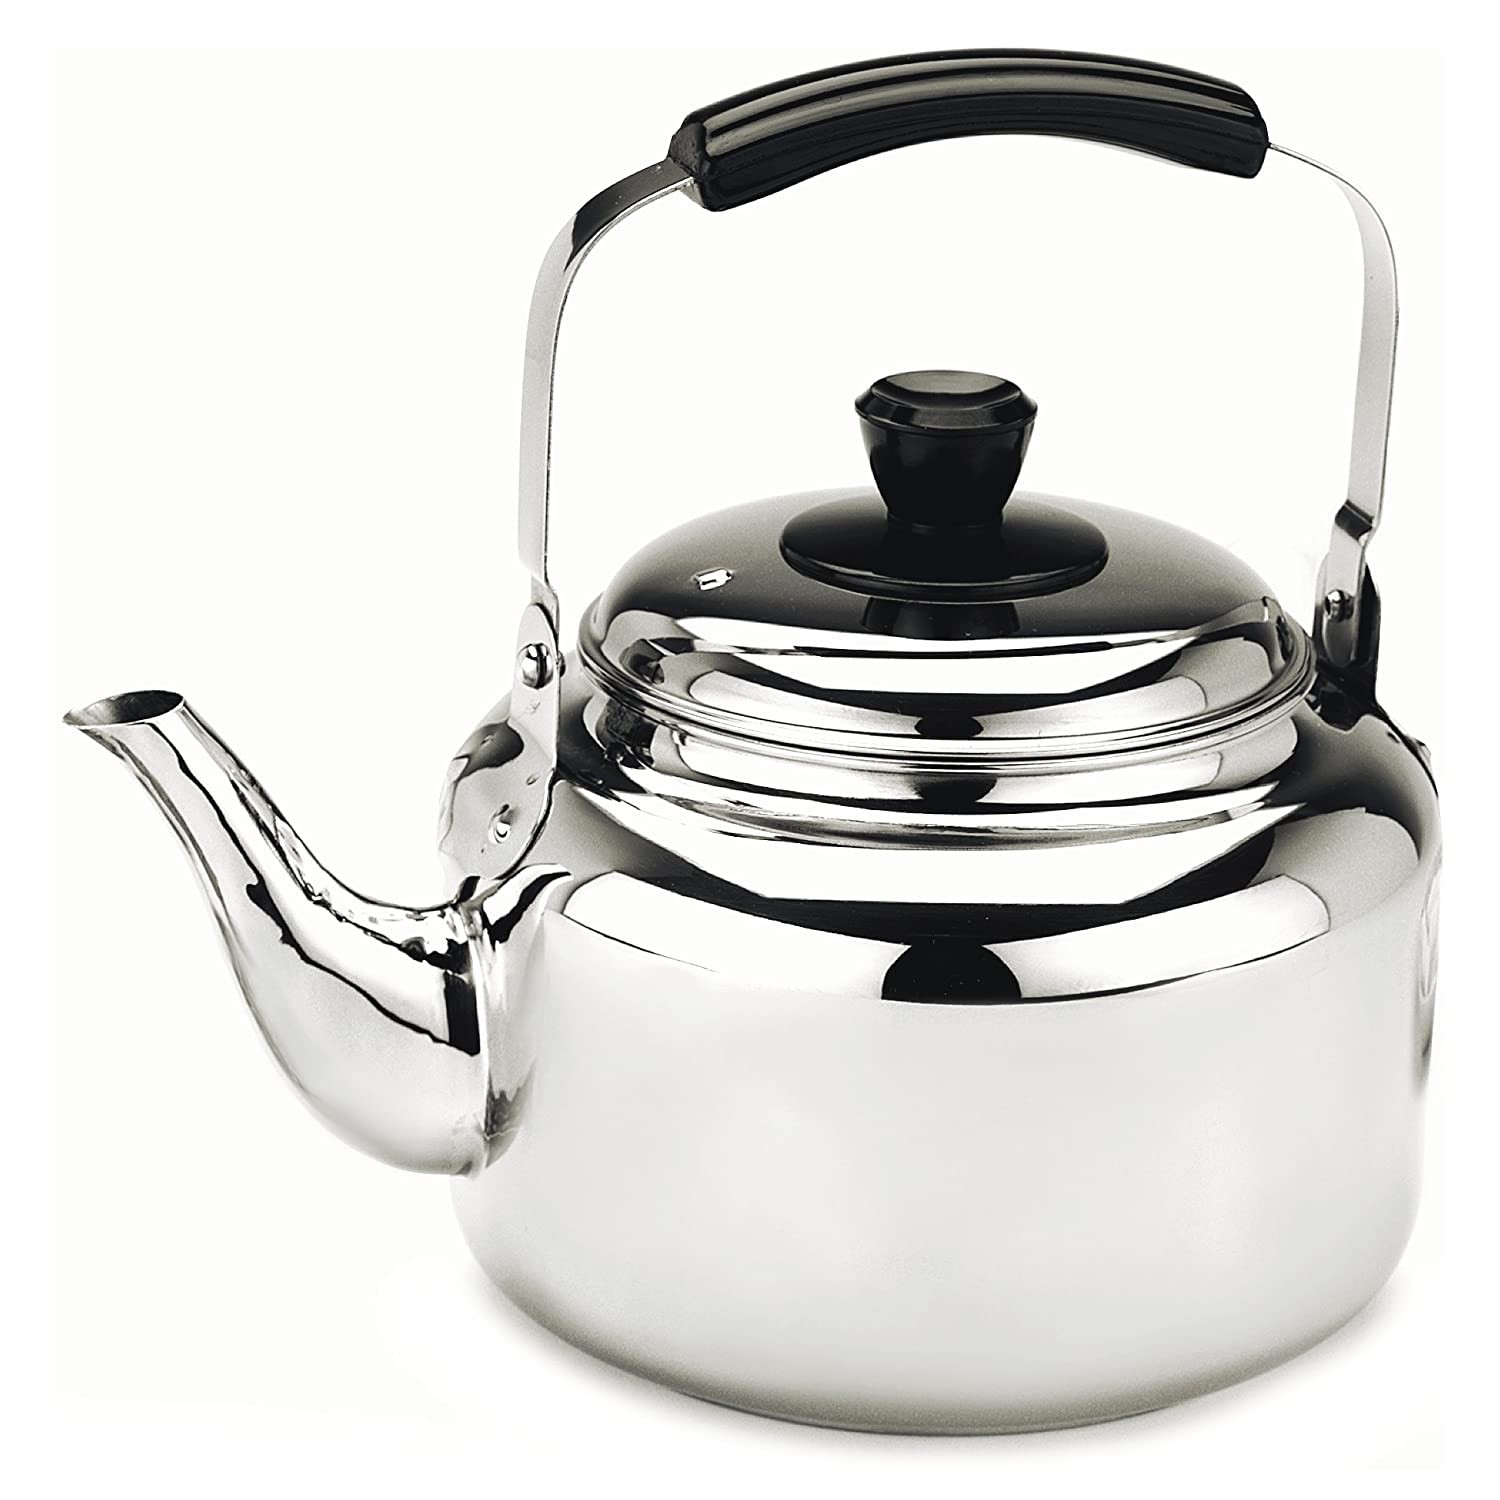 Cool unique and unusual tea kettles